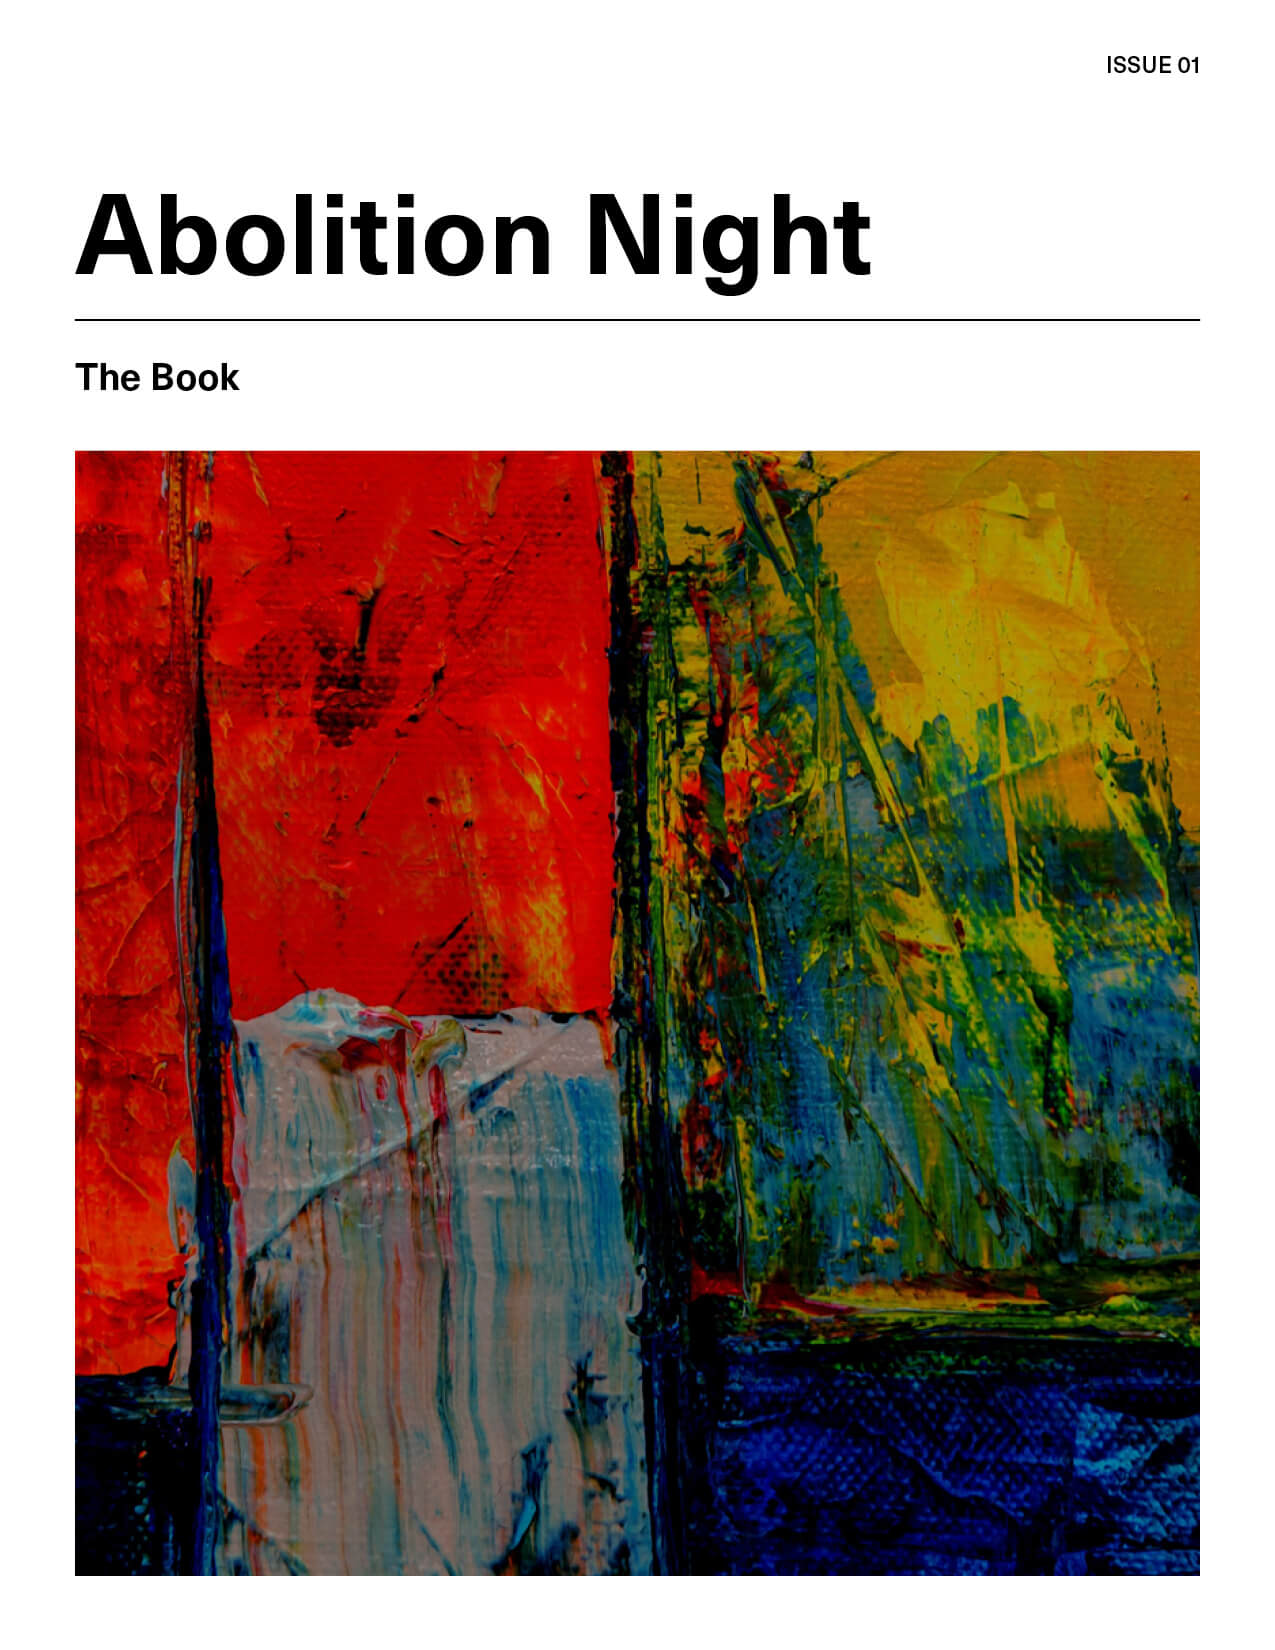 Abolition Night Book Cover